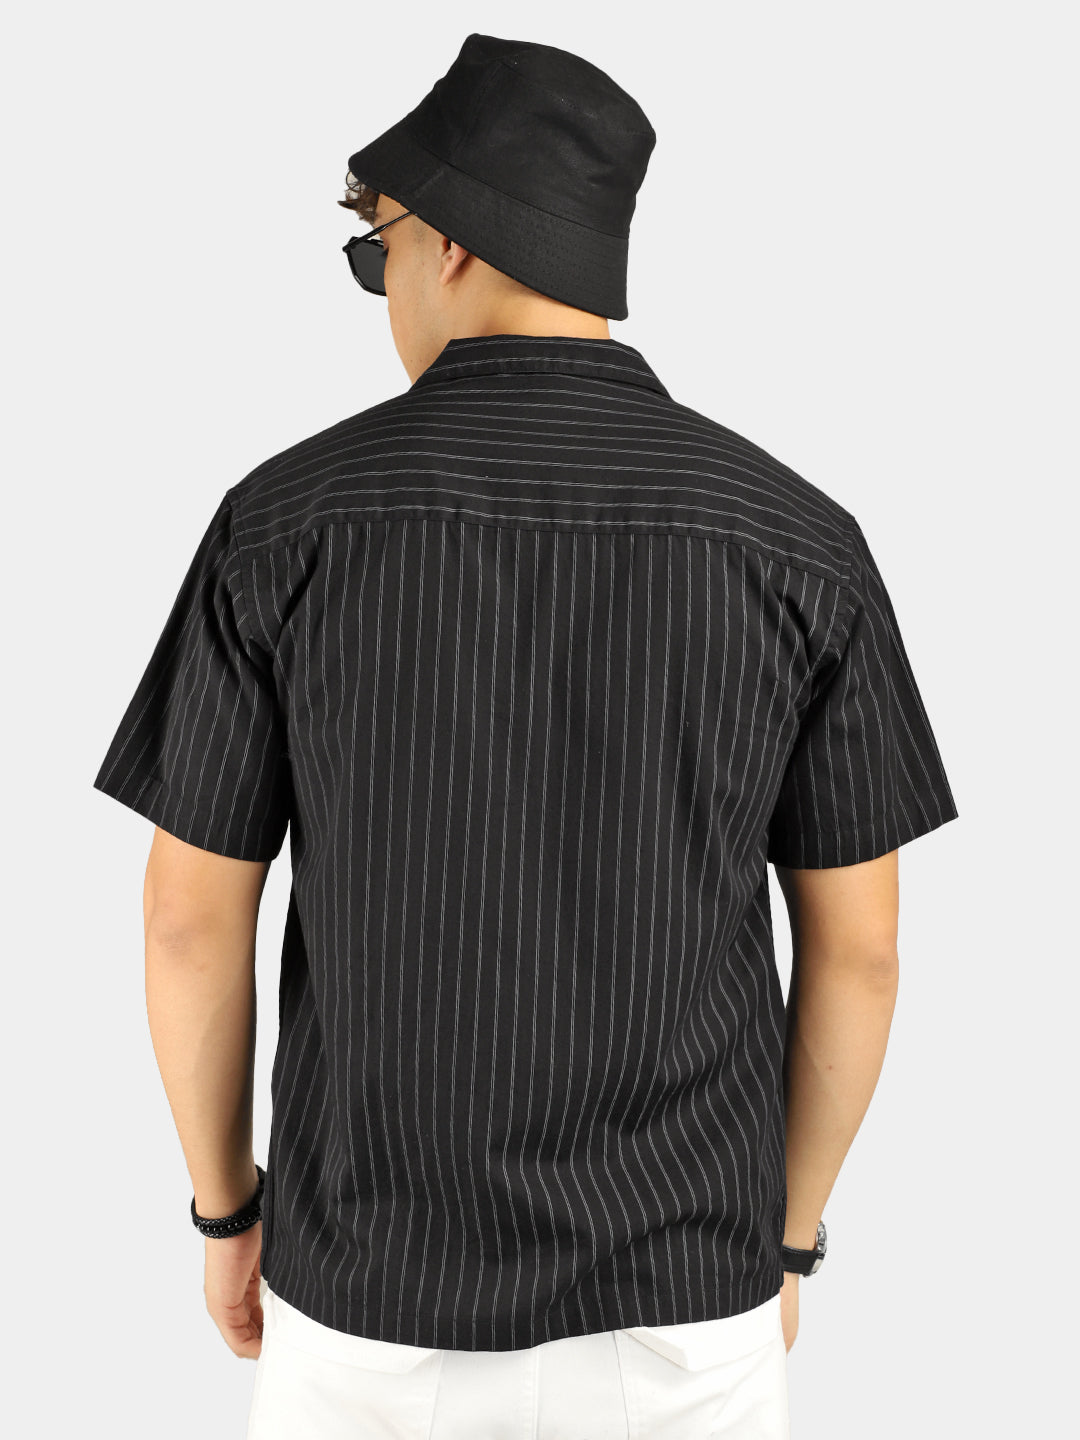 Stripe Vibe BlacK Half Sleeve Shirt